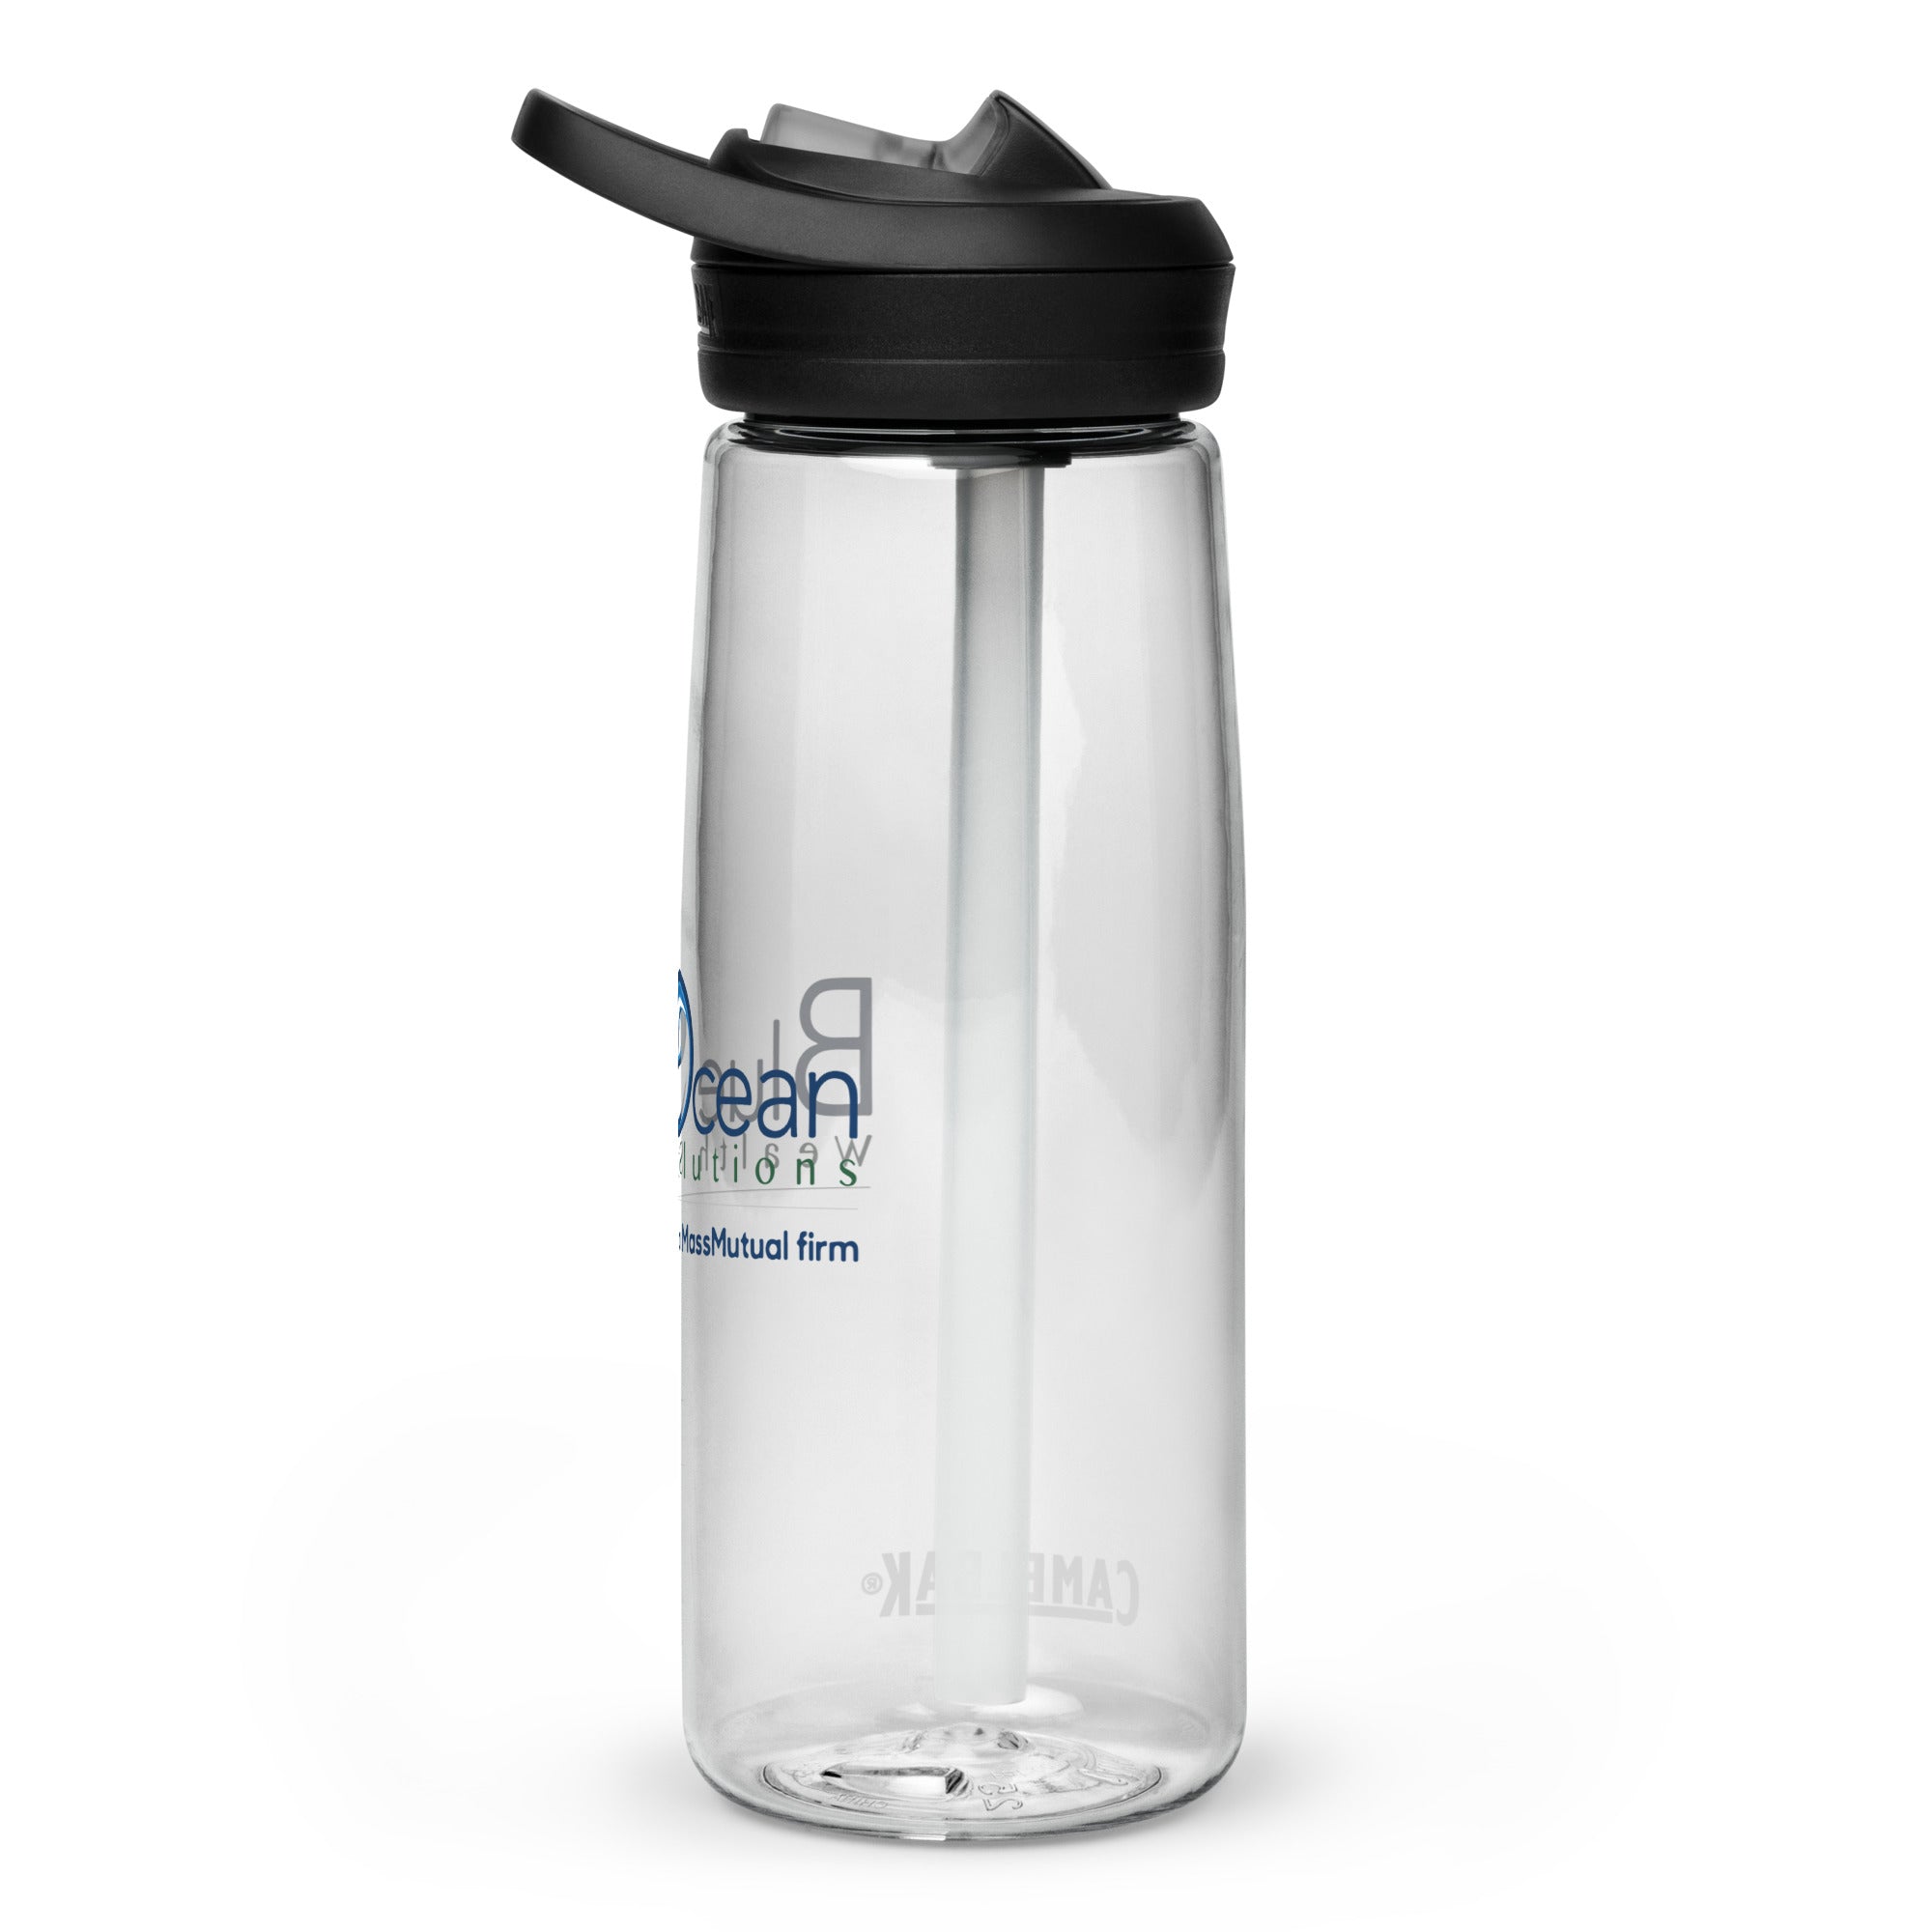 BOWS Sports water bottle